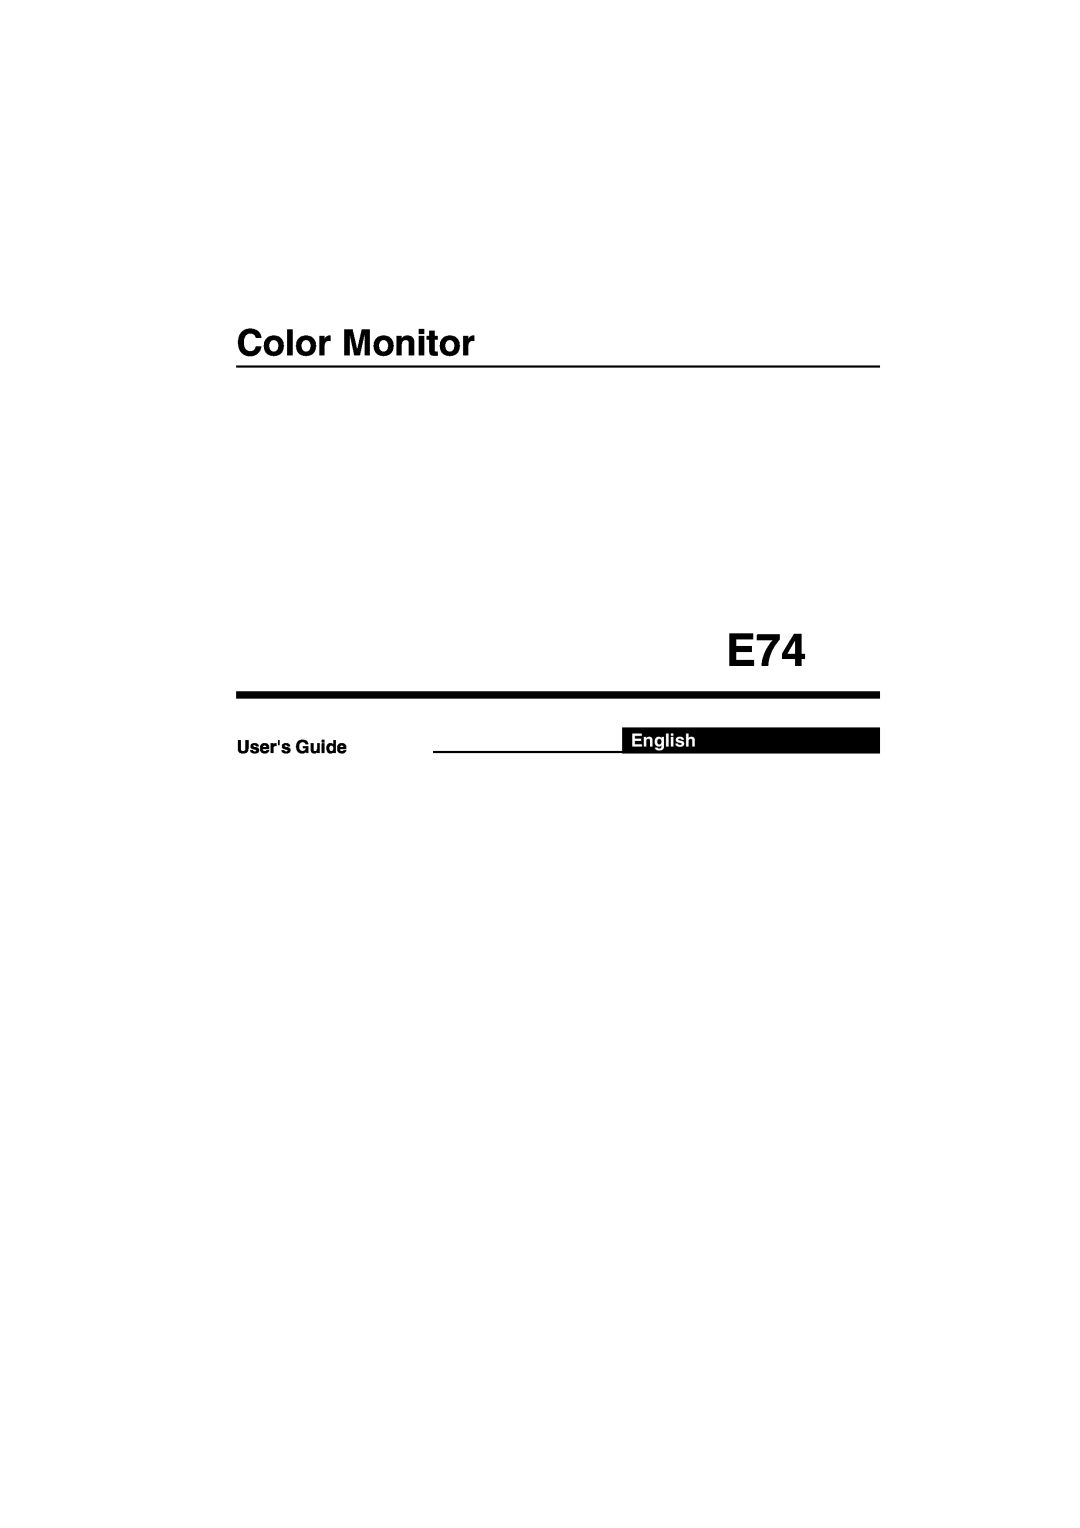 Lenovo E74 manual Users Guide, Color Monitor, English 